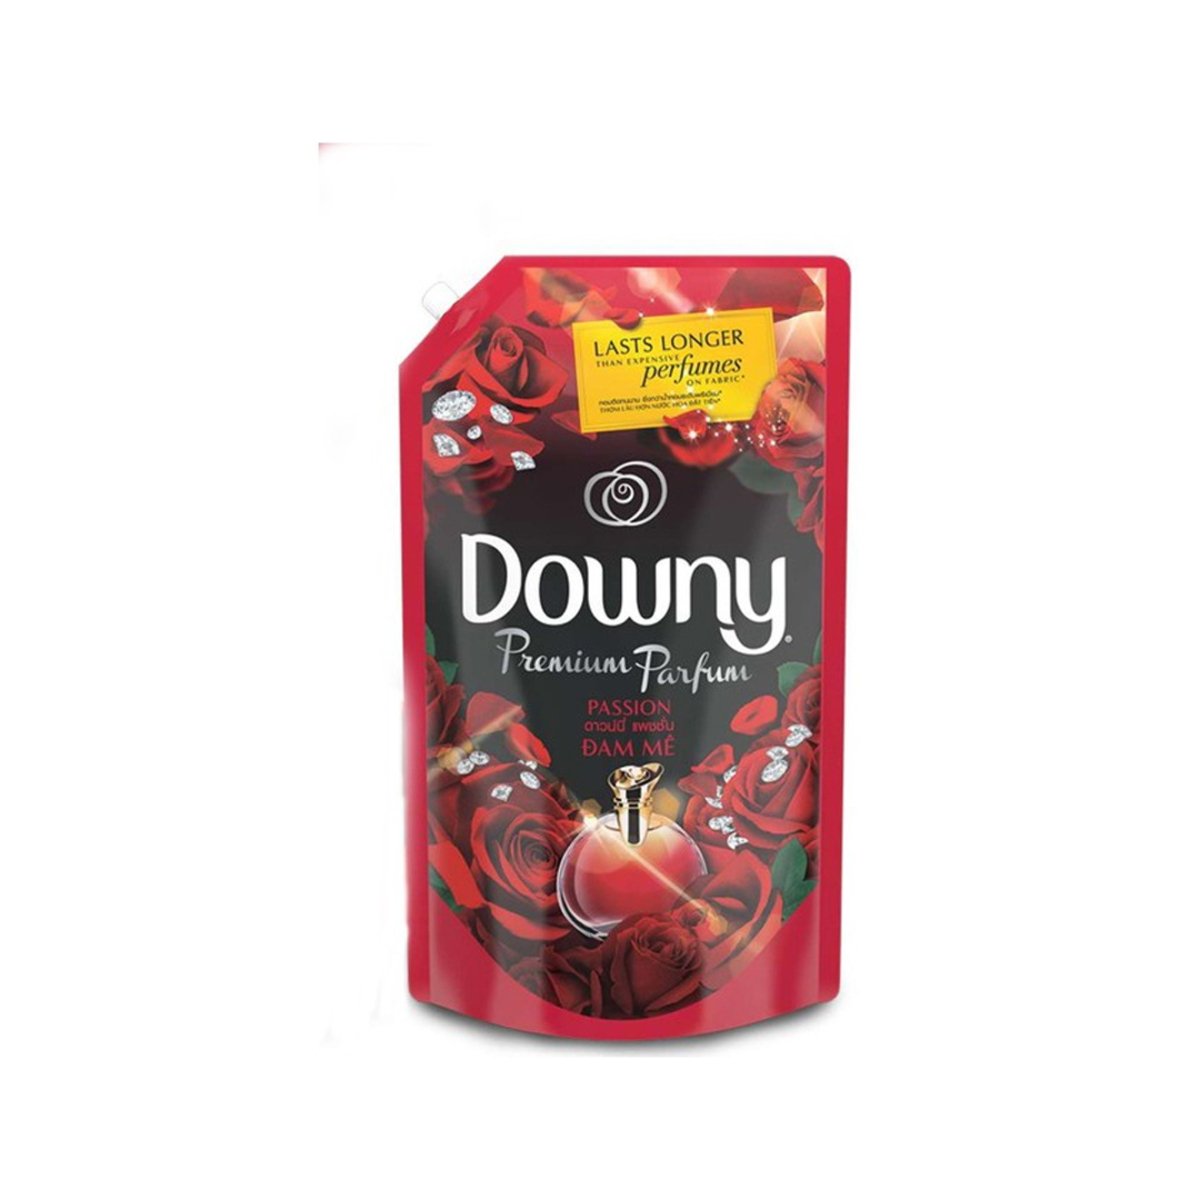 Downy Premium Parfum Liquid Passion Pouch 1.4Liter